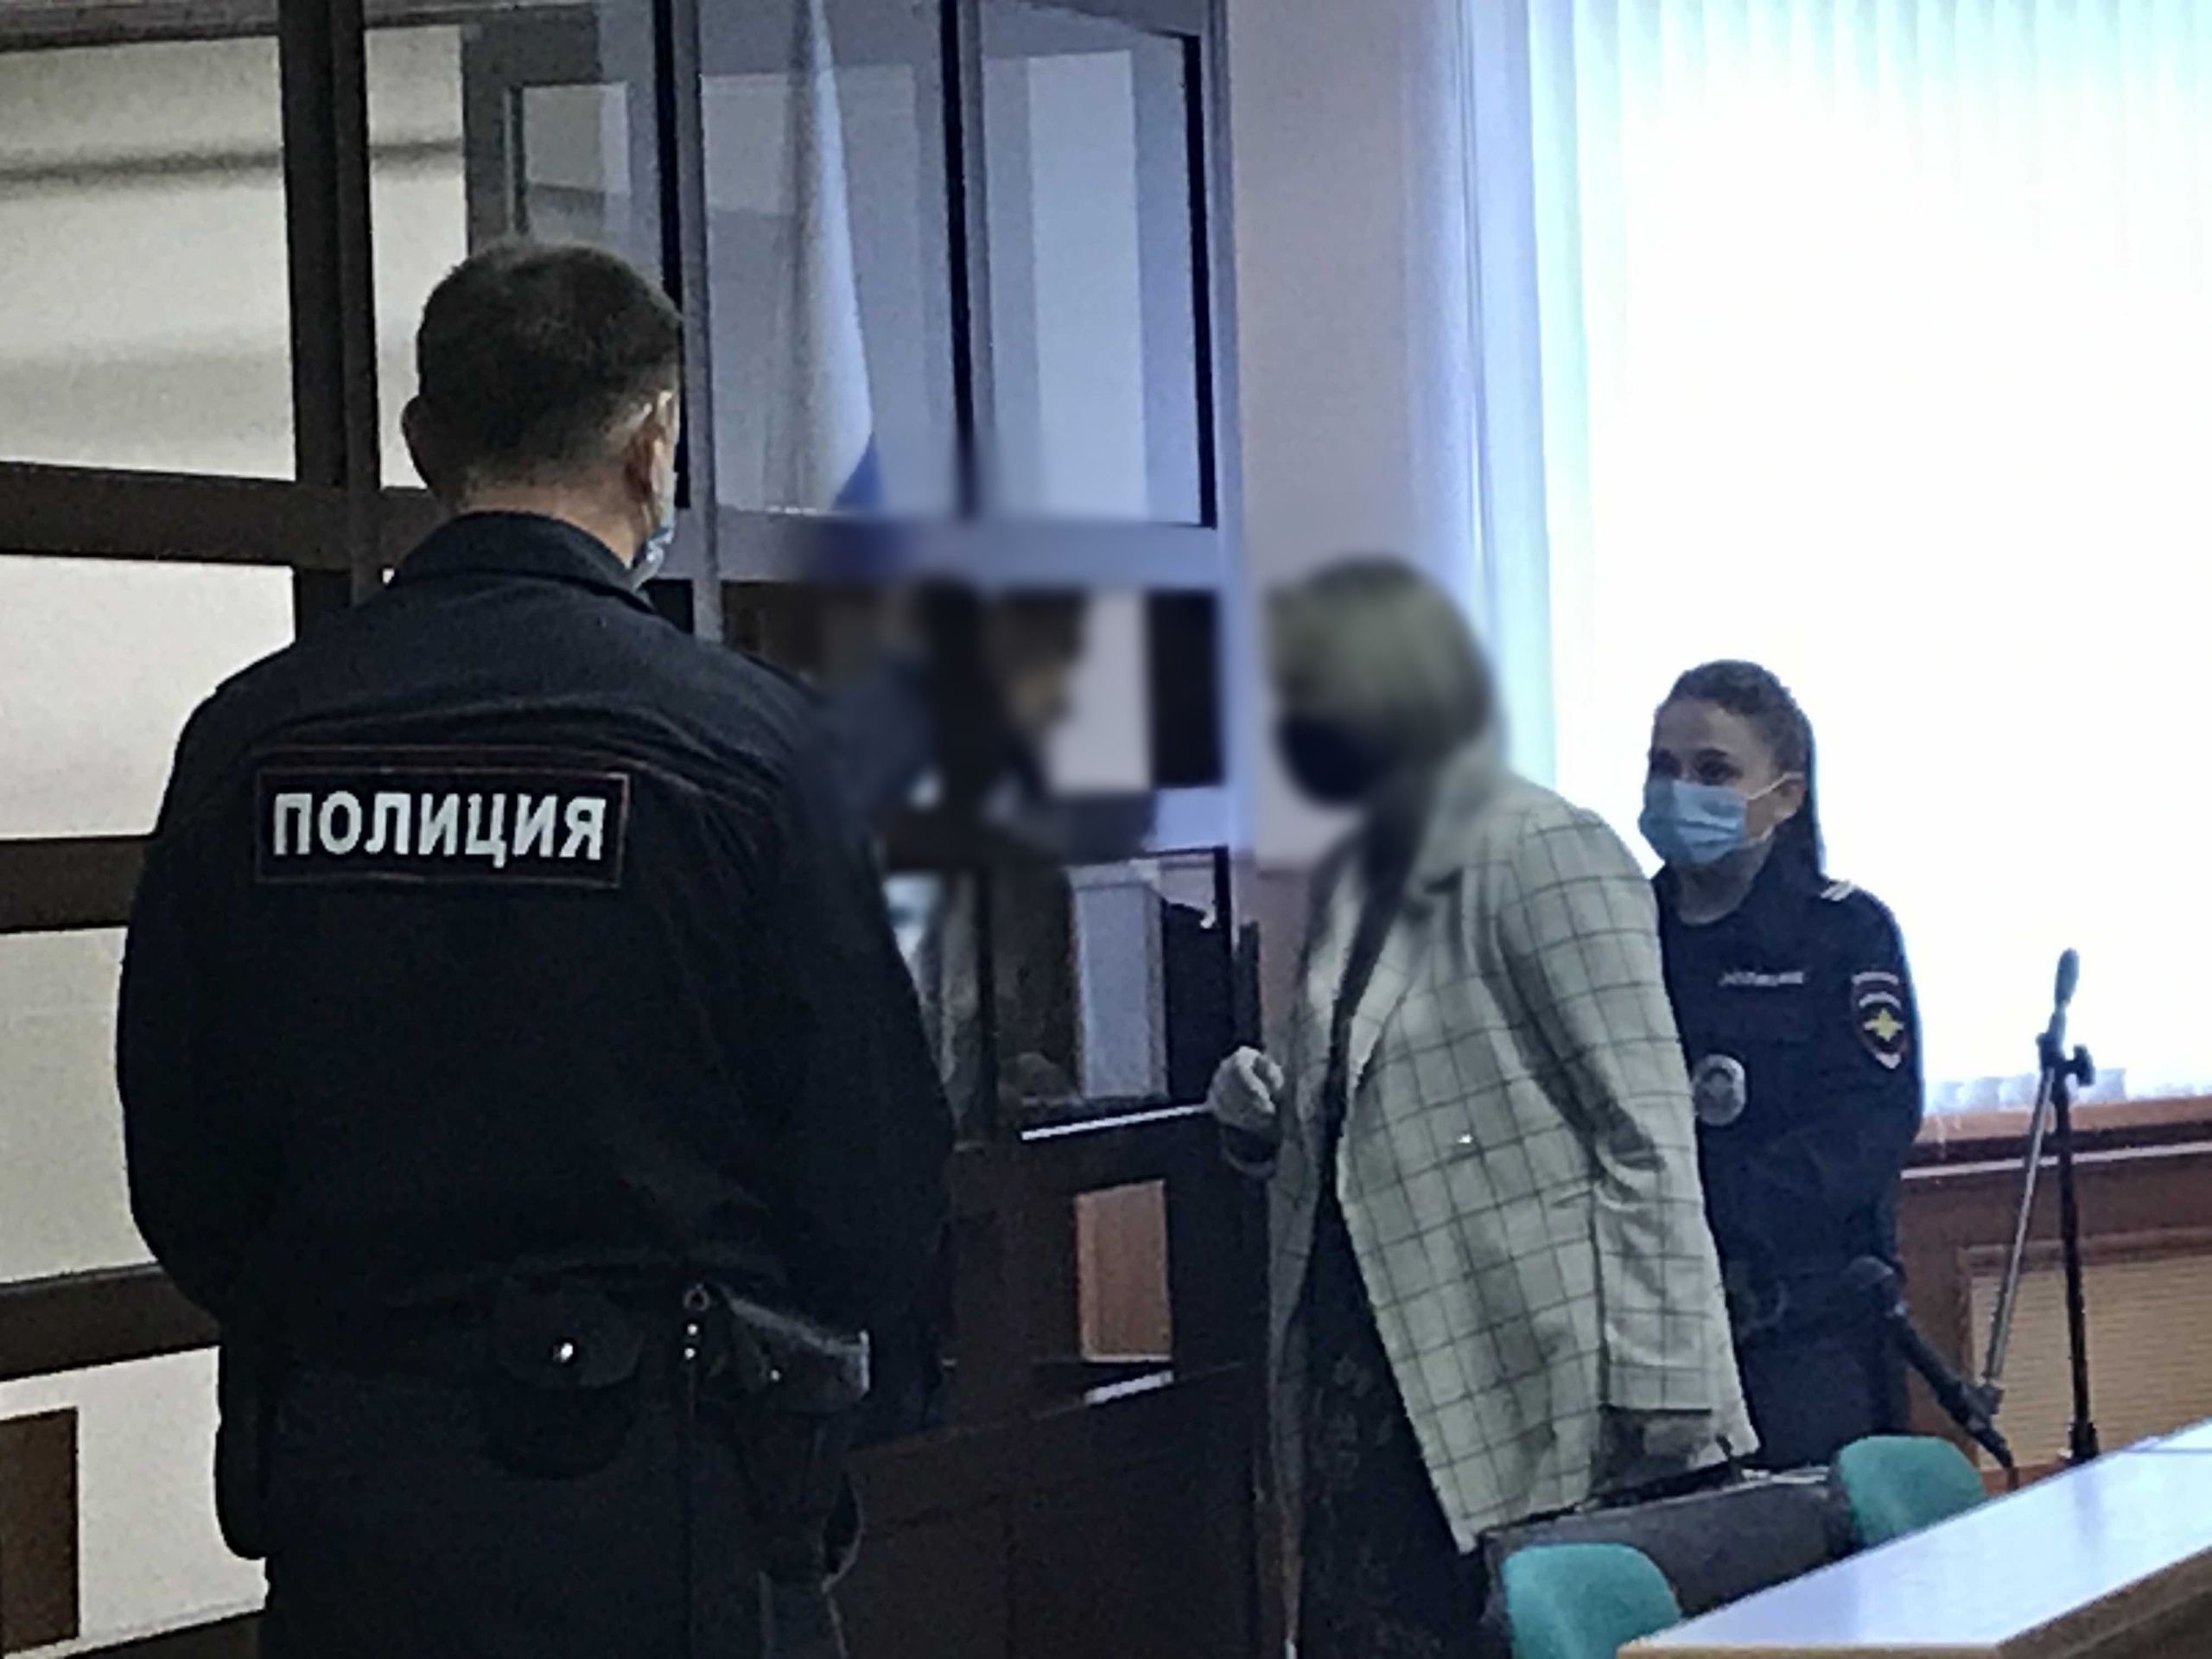  В Ярославле пассажир с ножом взял в заложники любовницу и таксиста